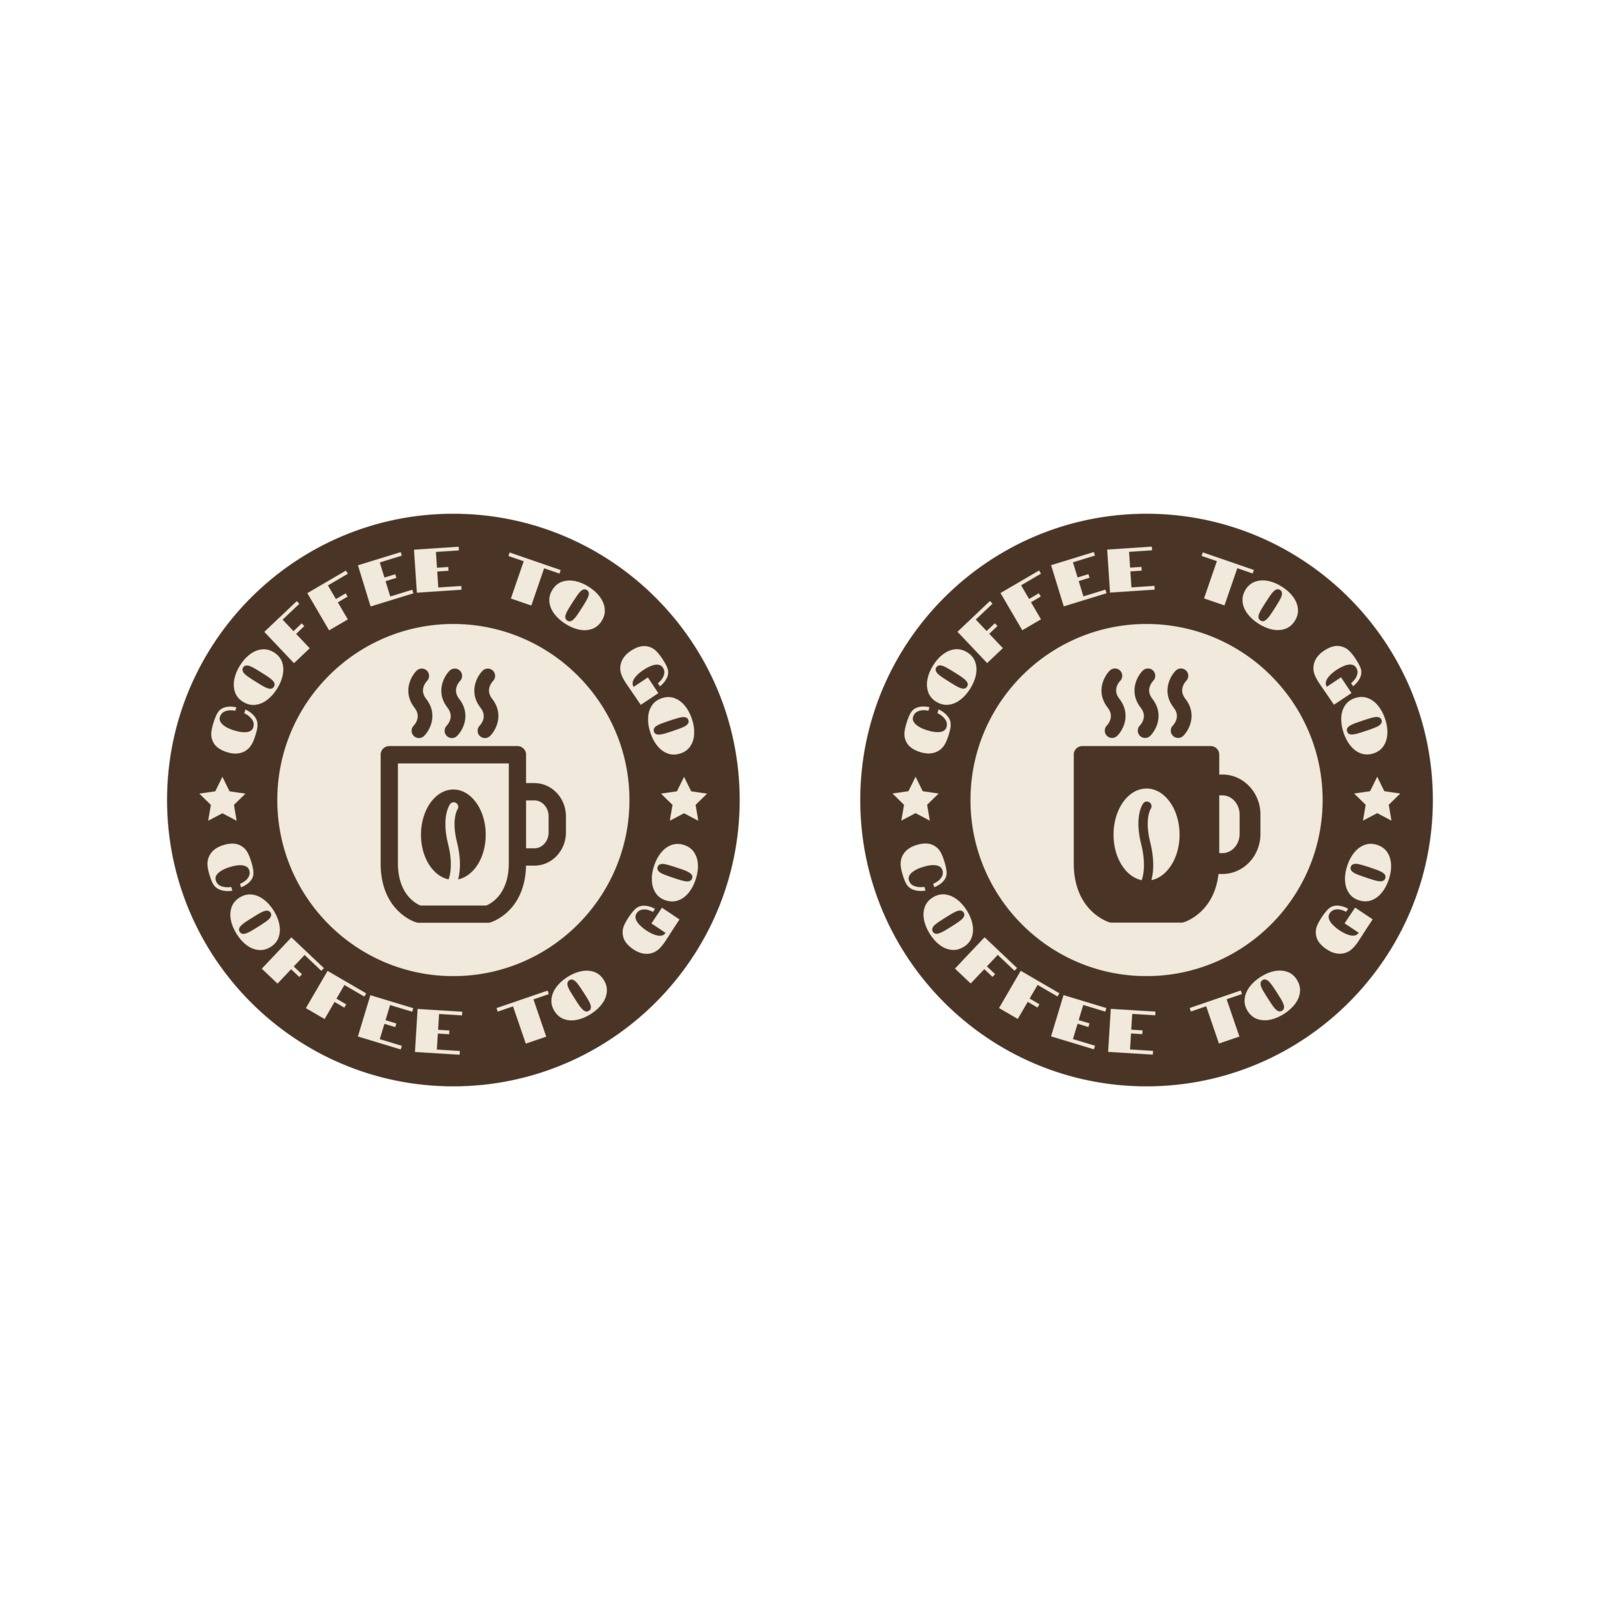 Coffee to go label, vector symbol by cveivn